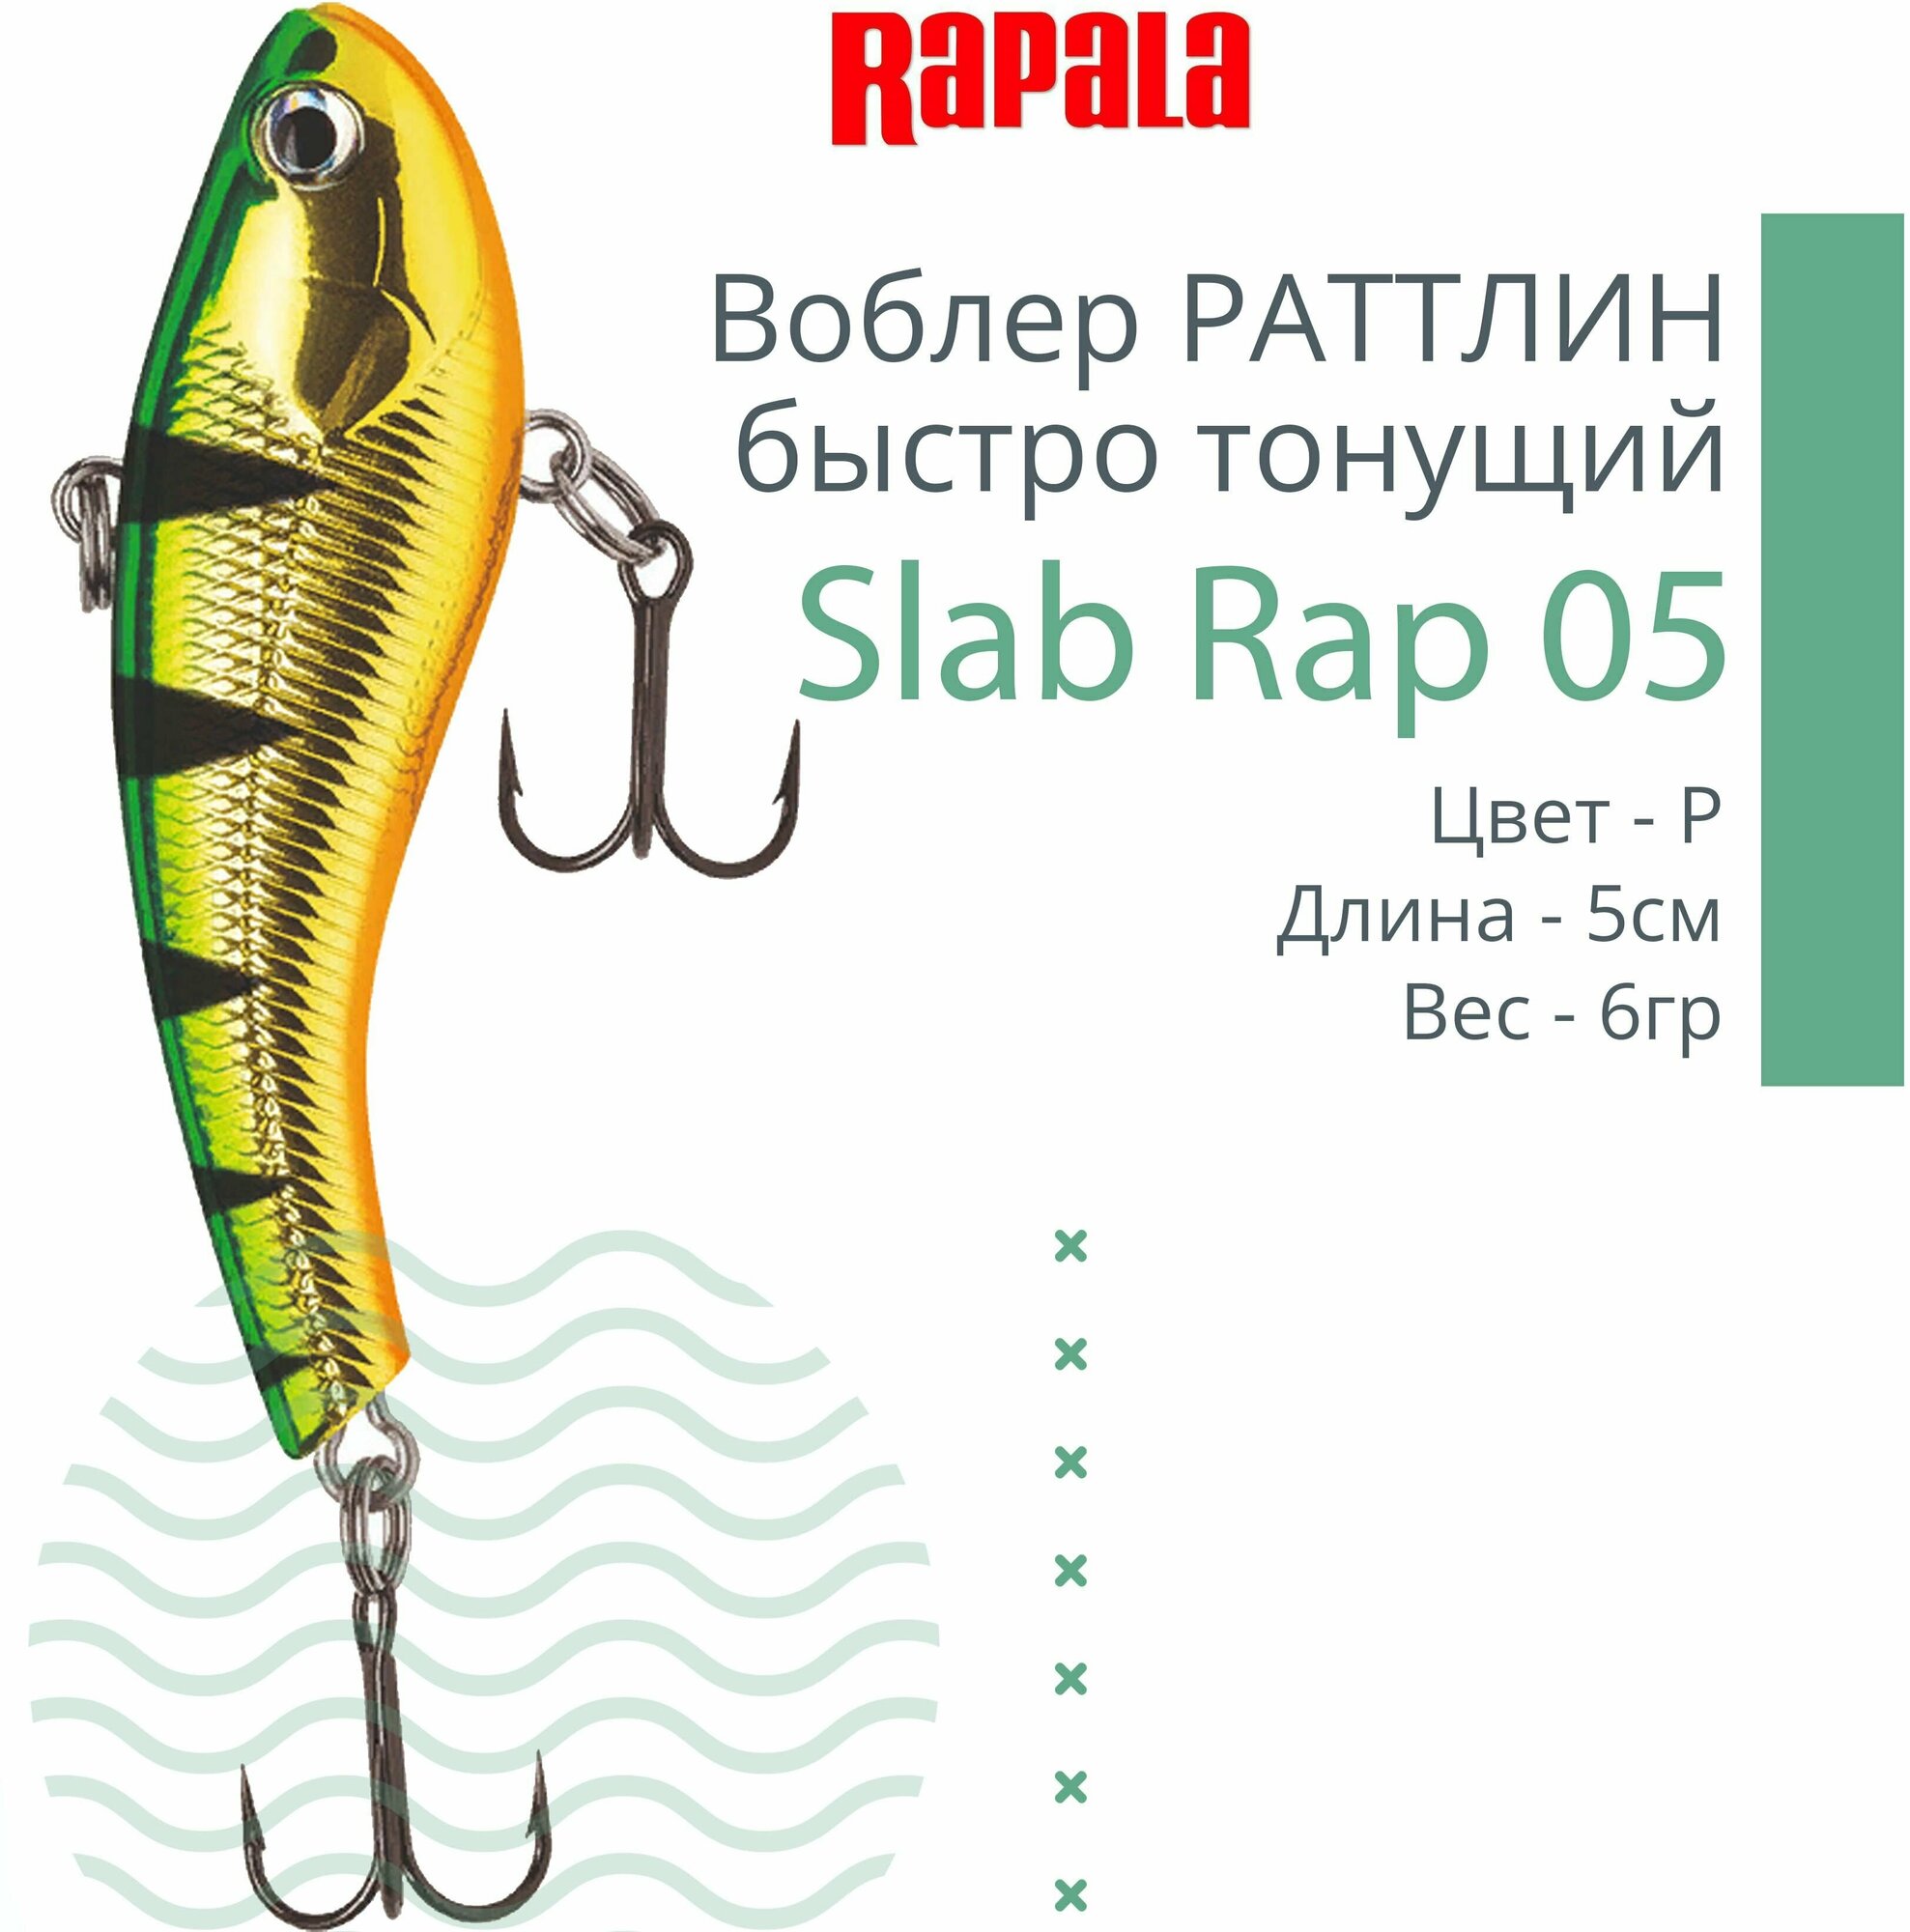 Rapala, Воблер Slab Rap 05, P